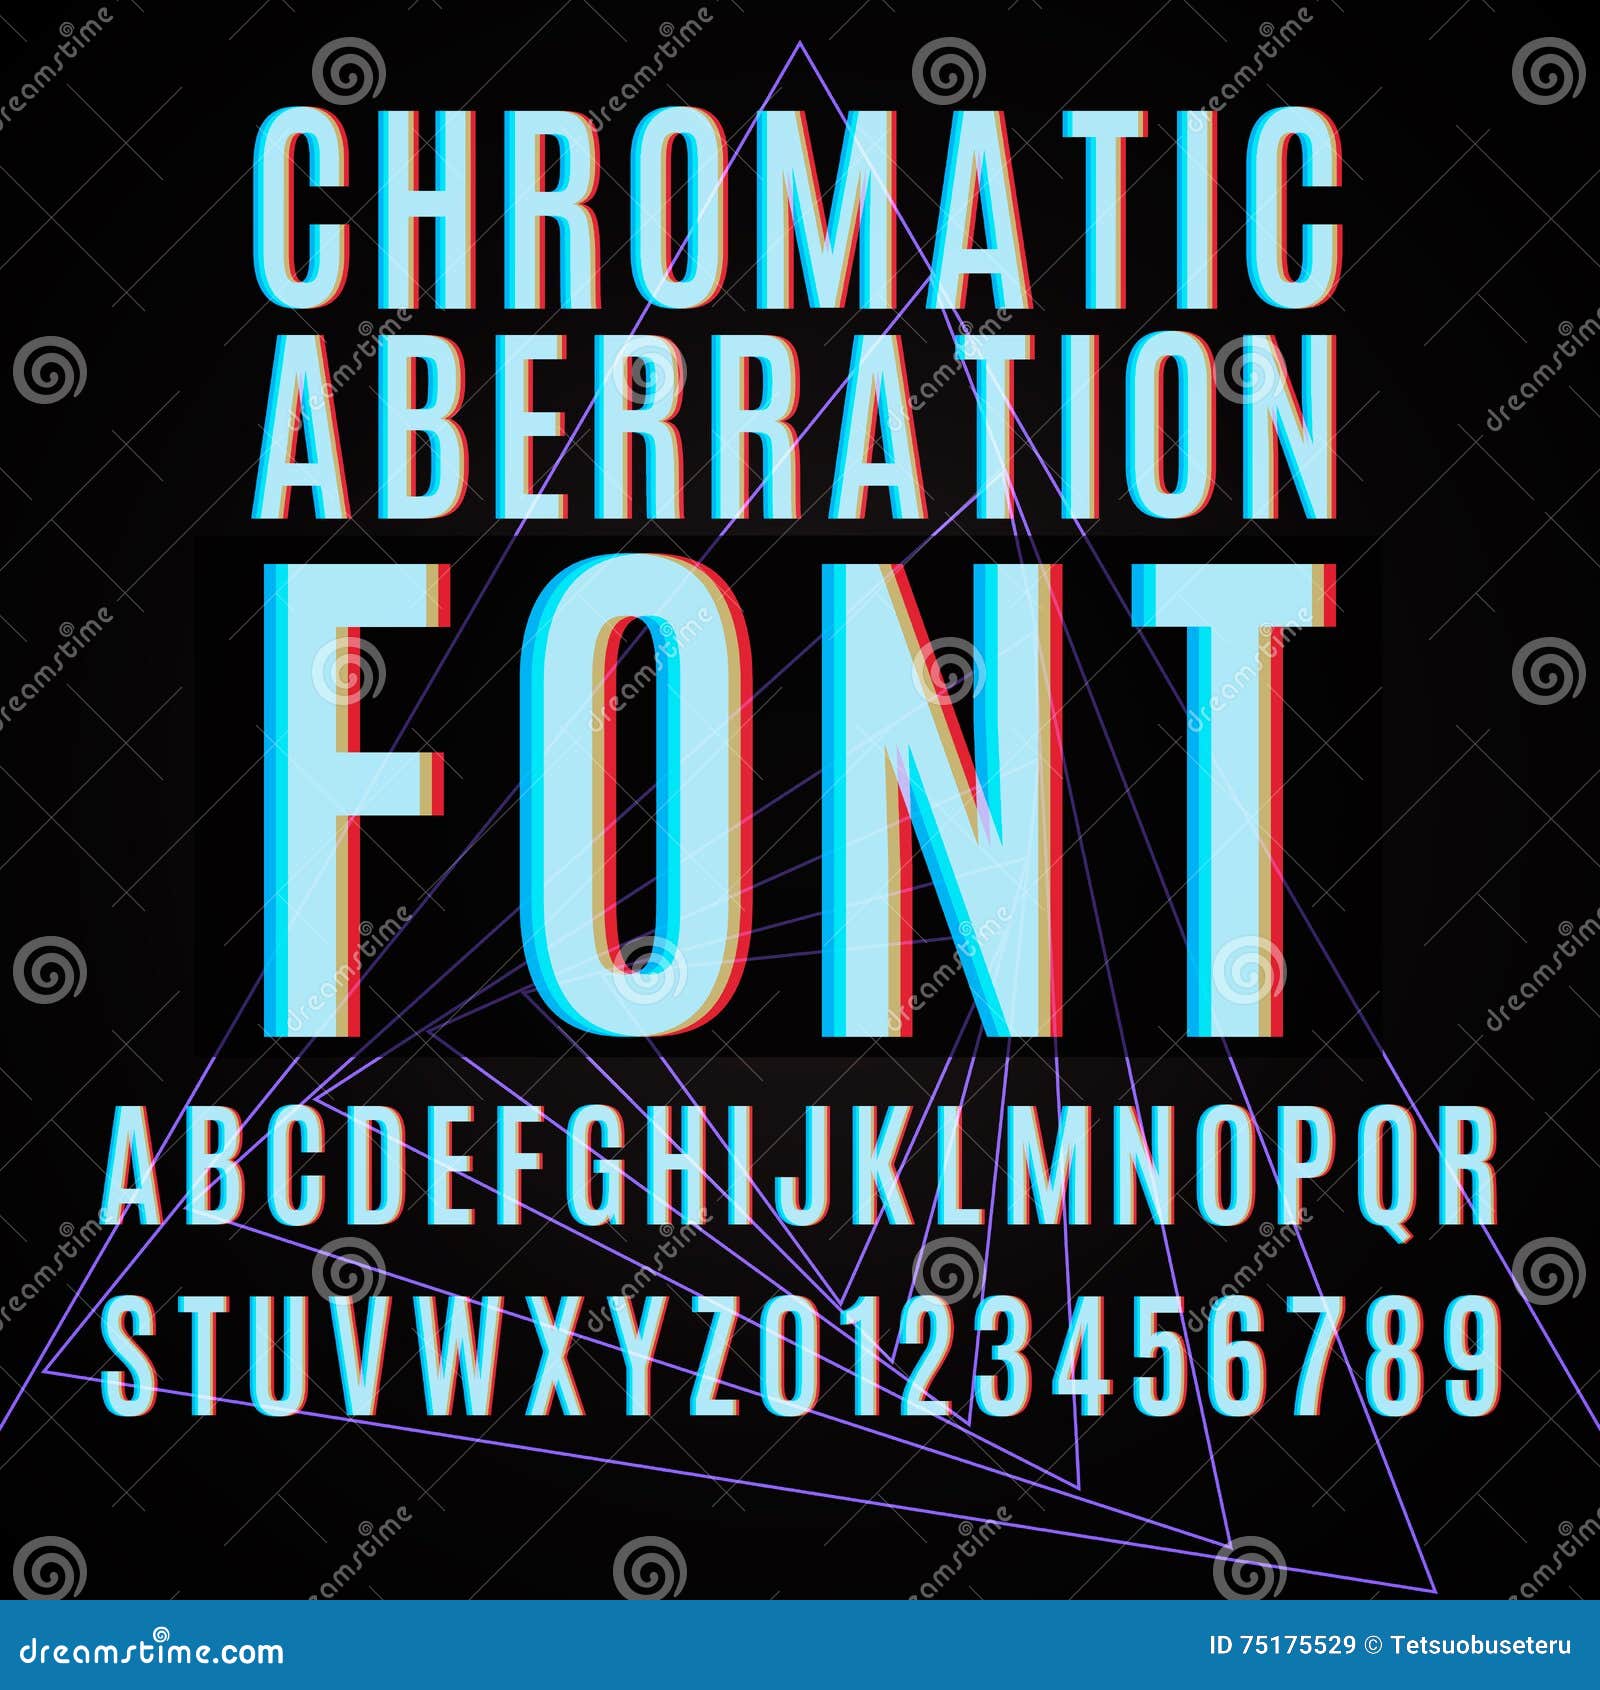 chromatic aberration font